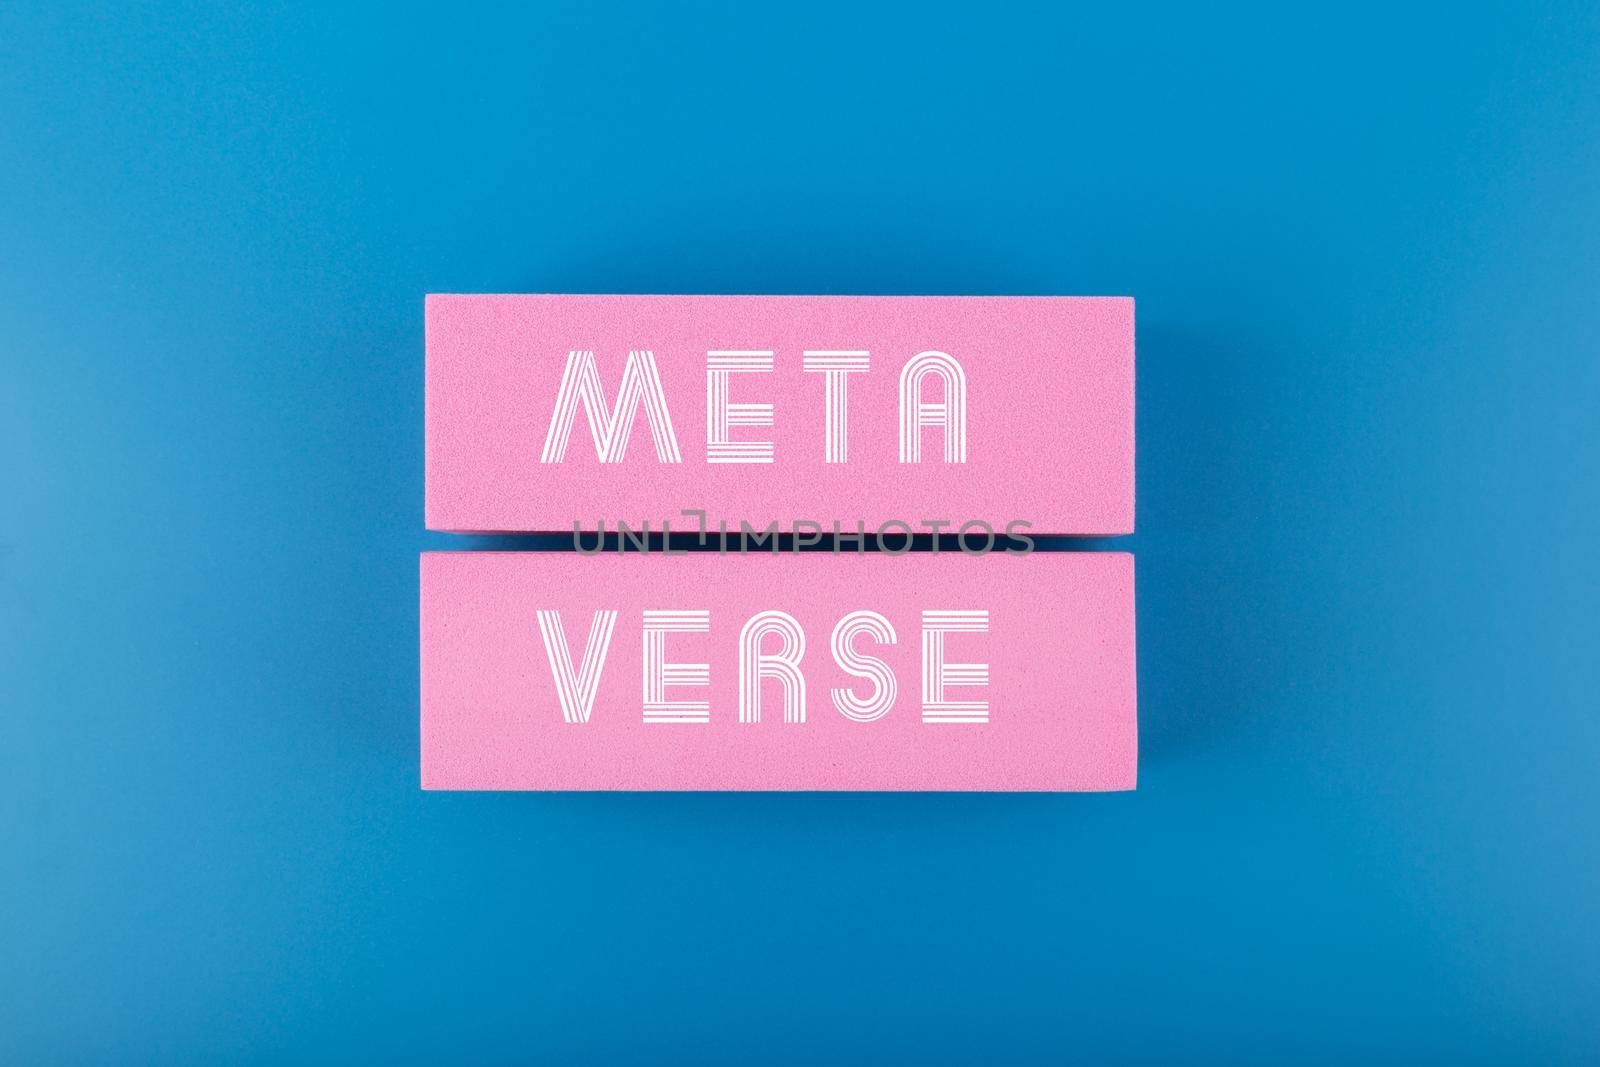 Metaverse modern minimal concept with written text meta verse on pink rectangles against dark blue background by Senorina_Irina